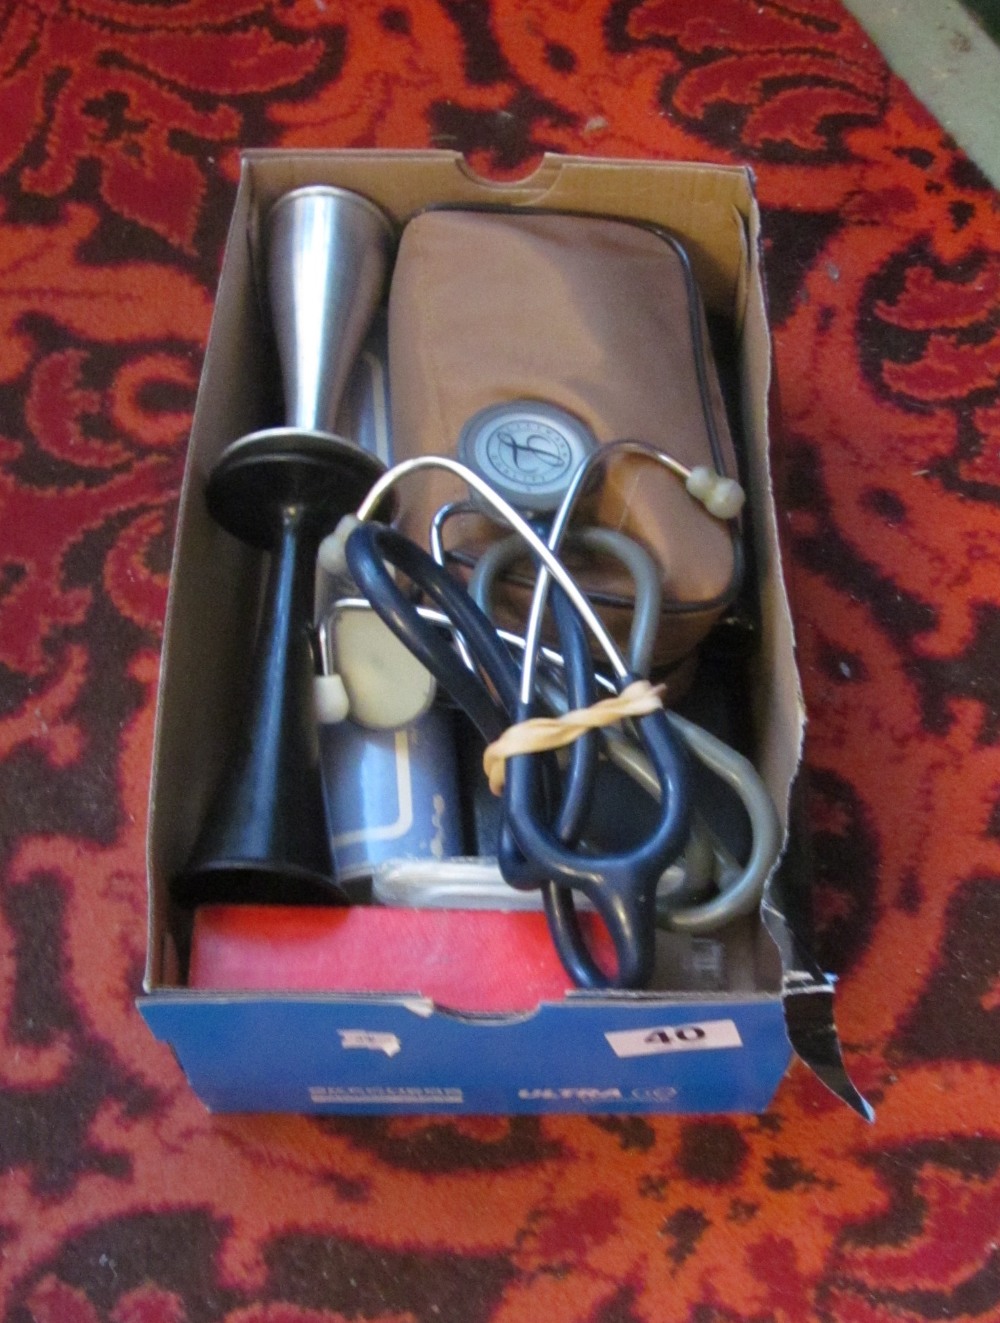 Some medical equipment stethoscope et cetera